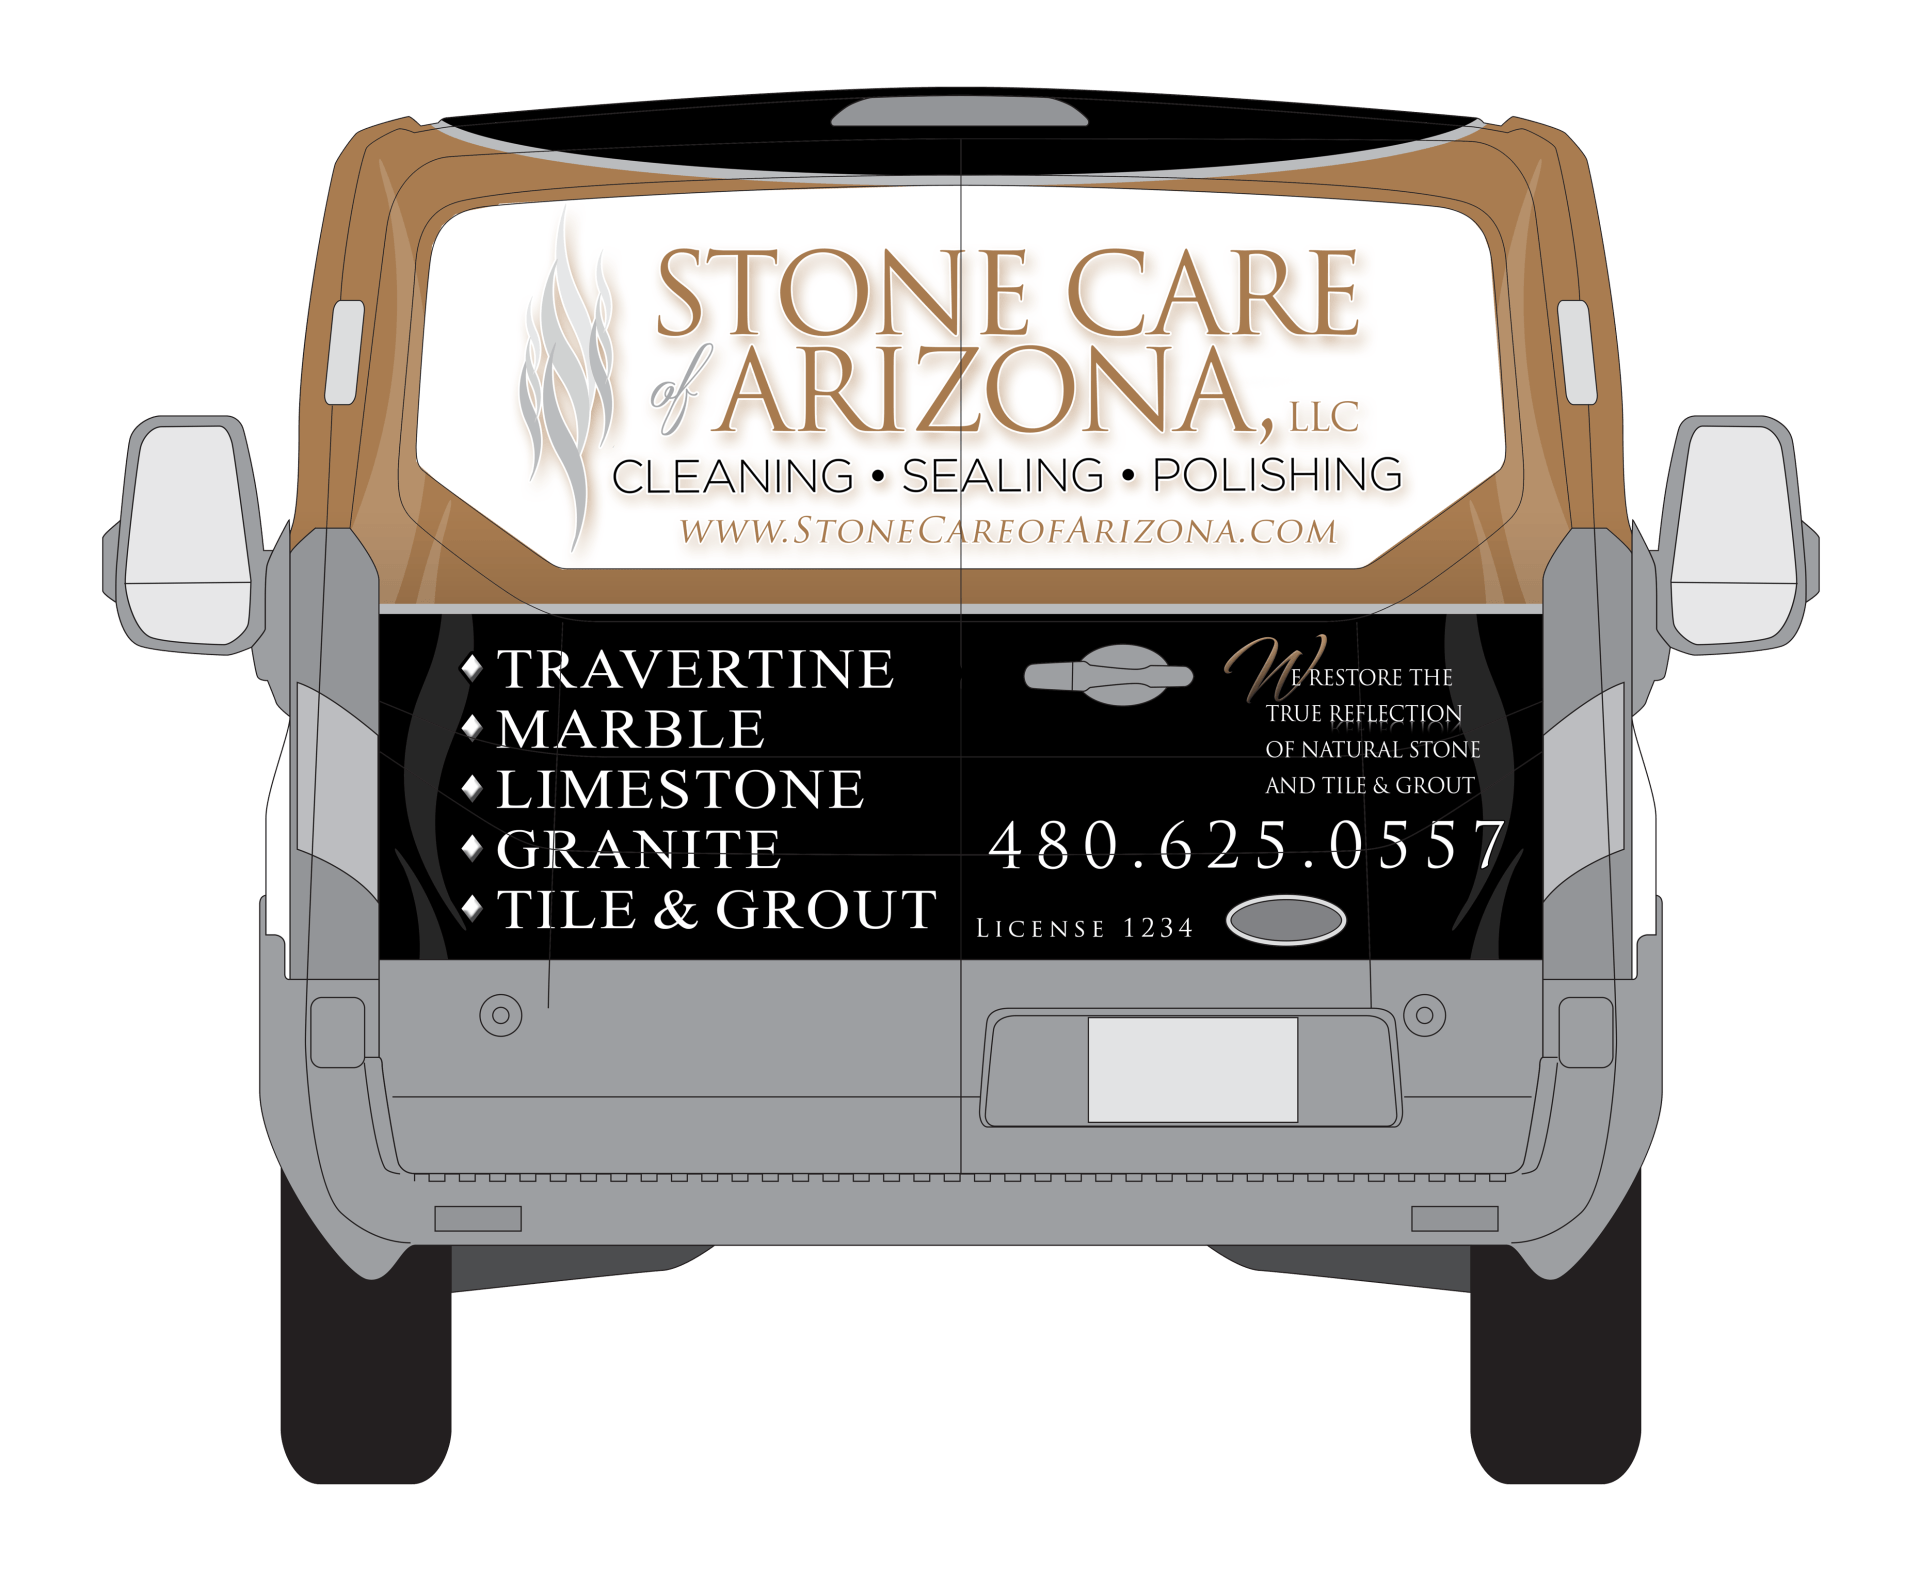 Stone Care of Arizona